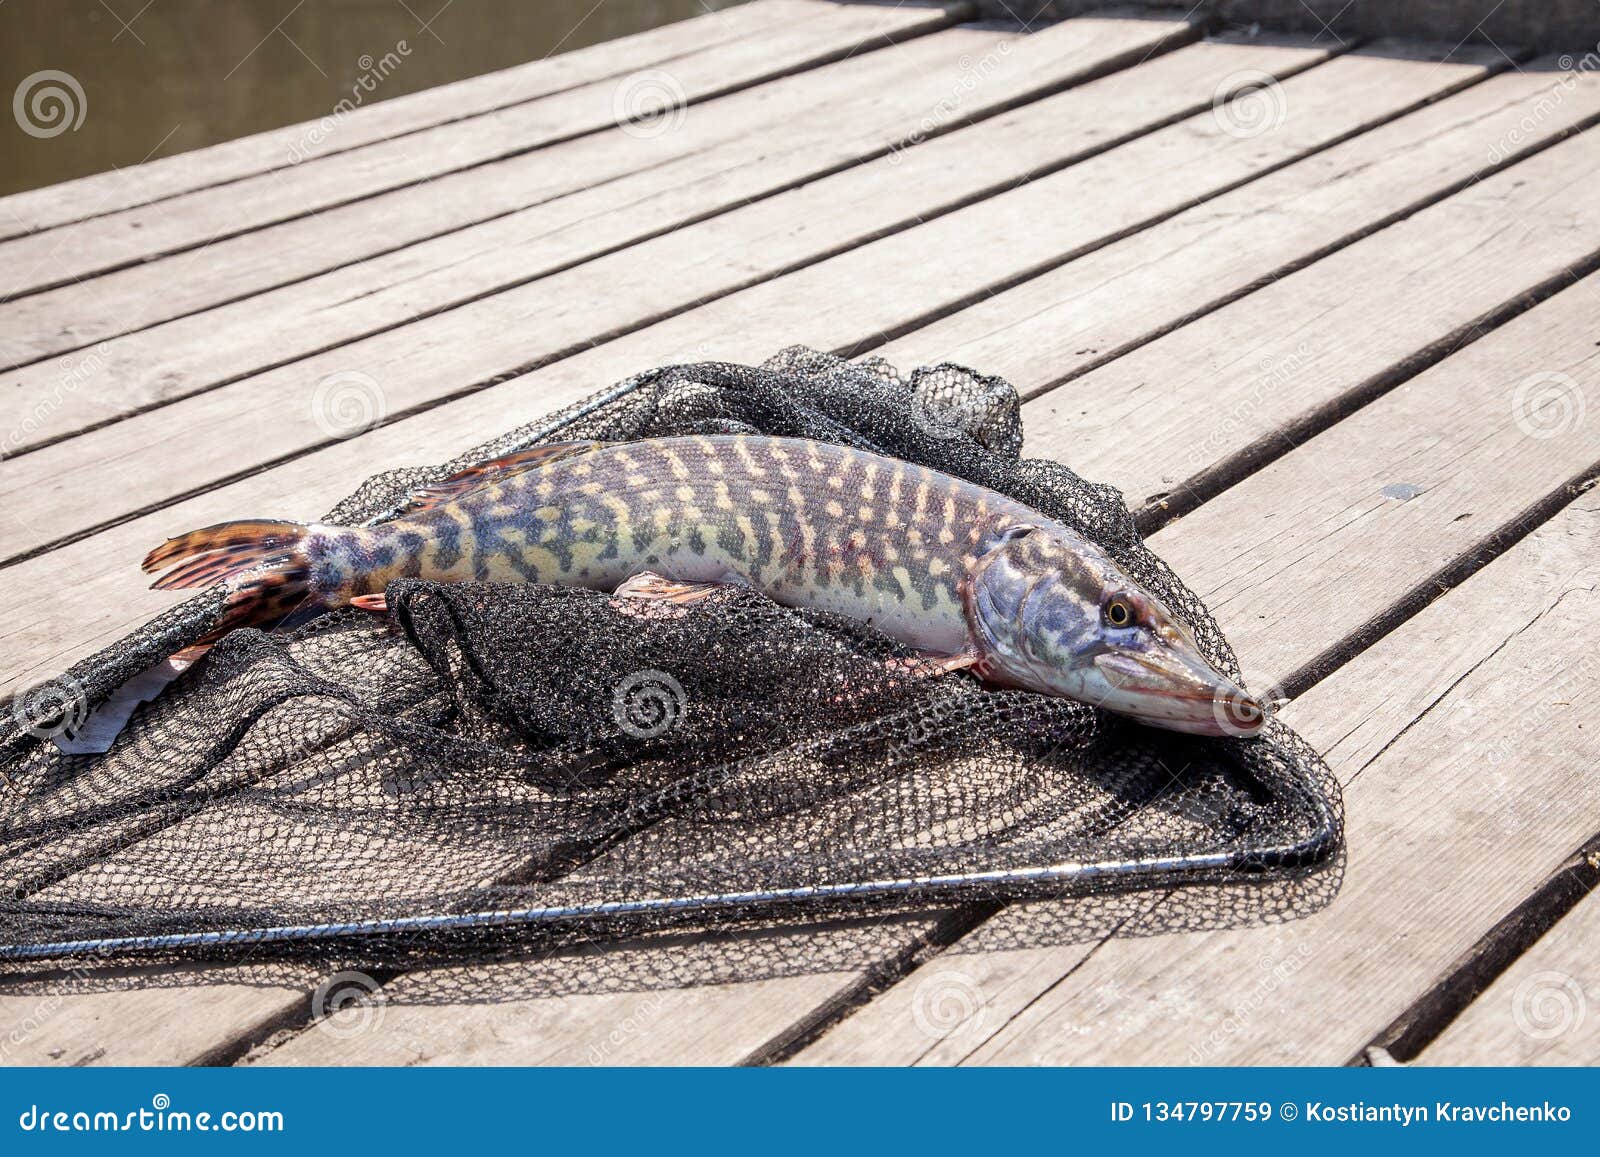 Trophy Fishing. Big Freshwater Pike Lies on Black Fishing Net